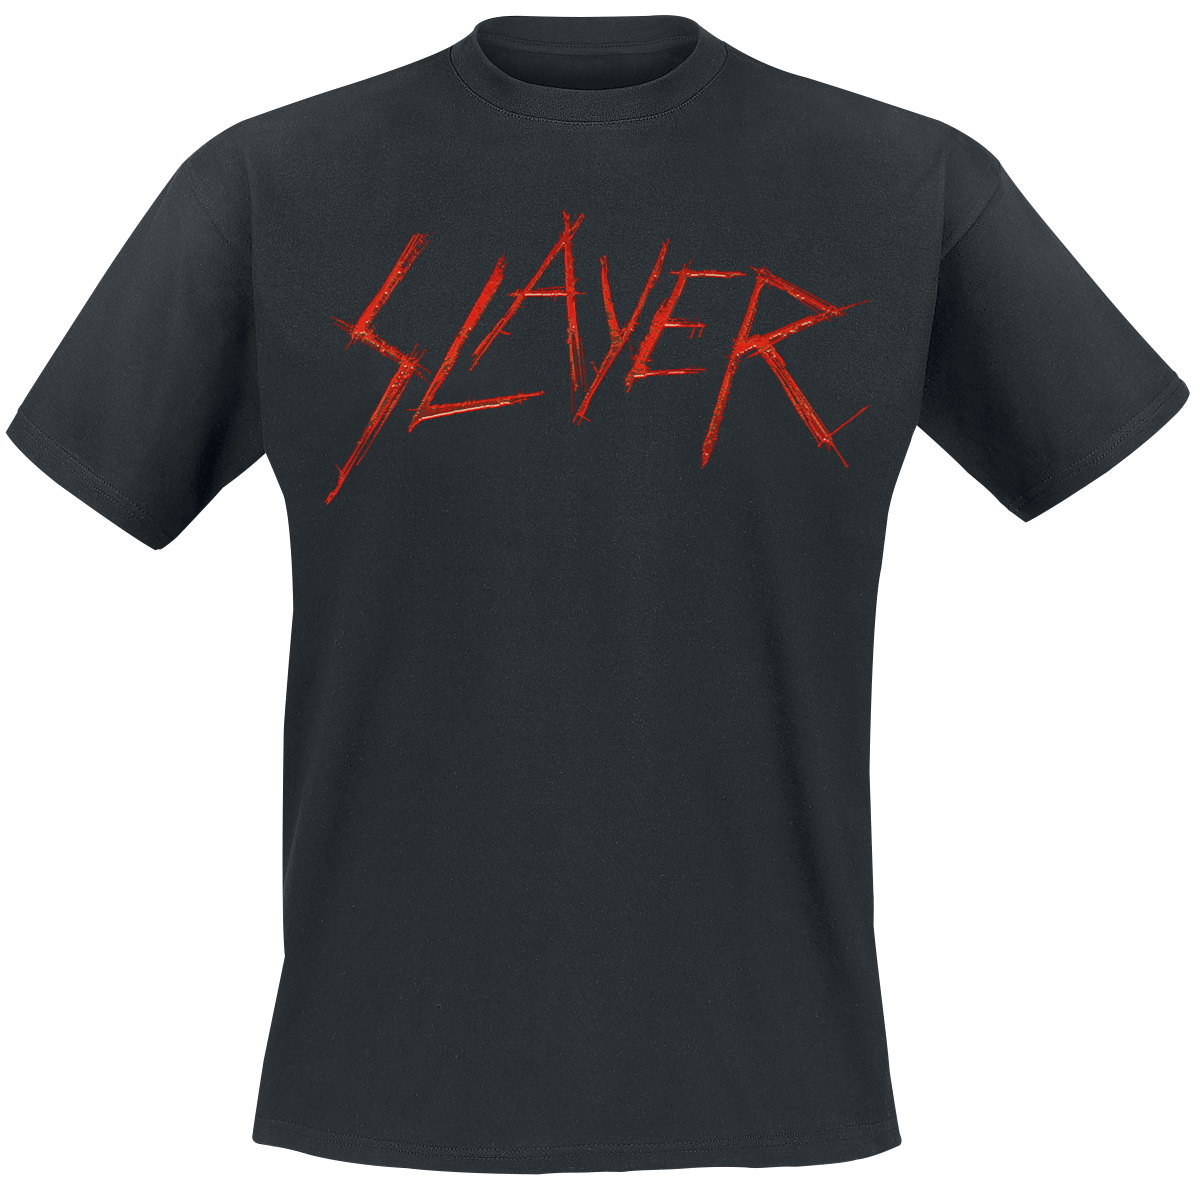 Slayer - Final World Tour - T-Shirt - black image